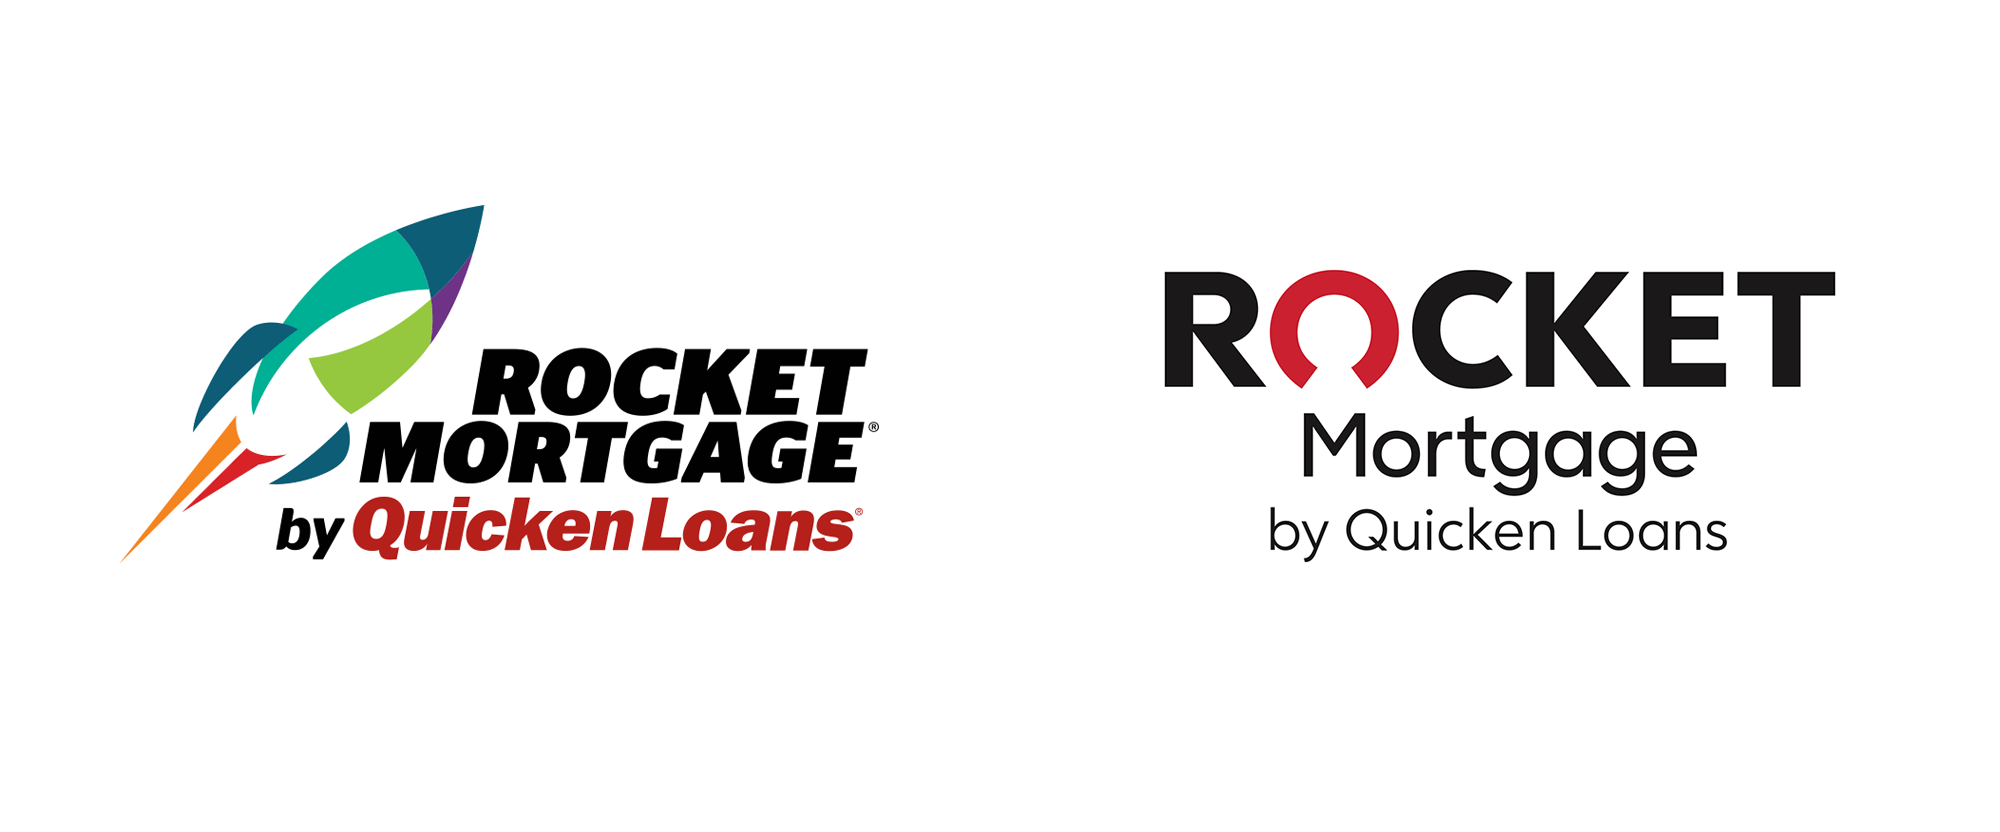 download rocket mortgage rates